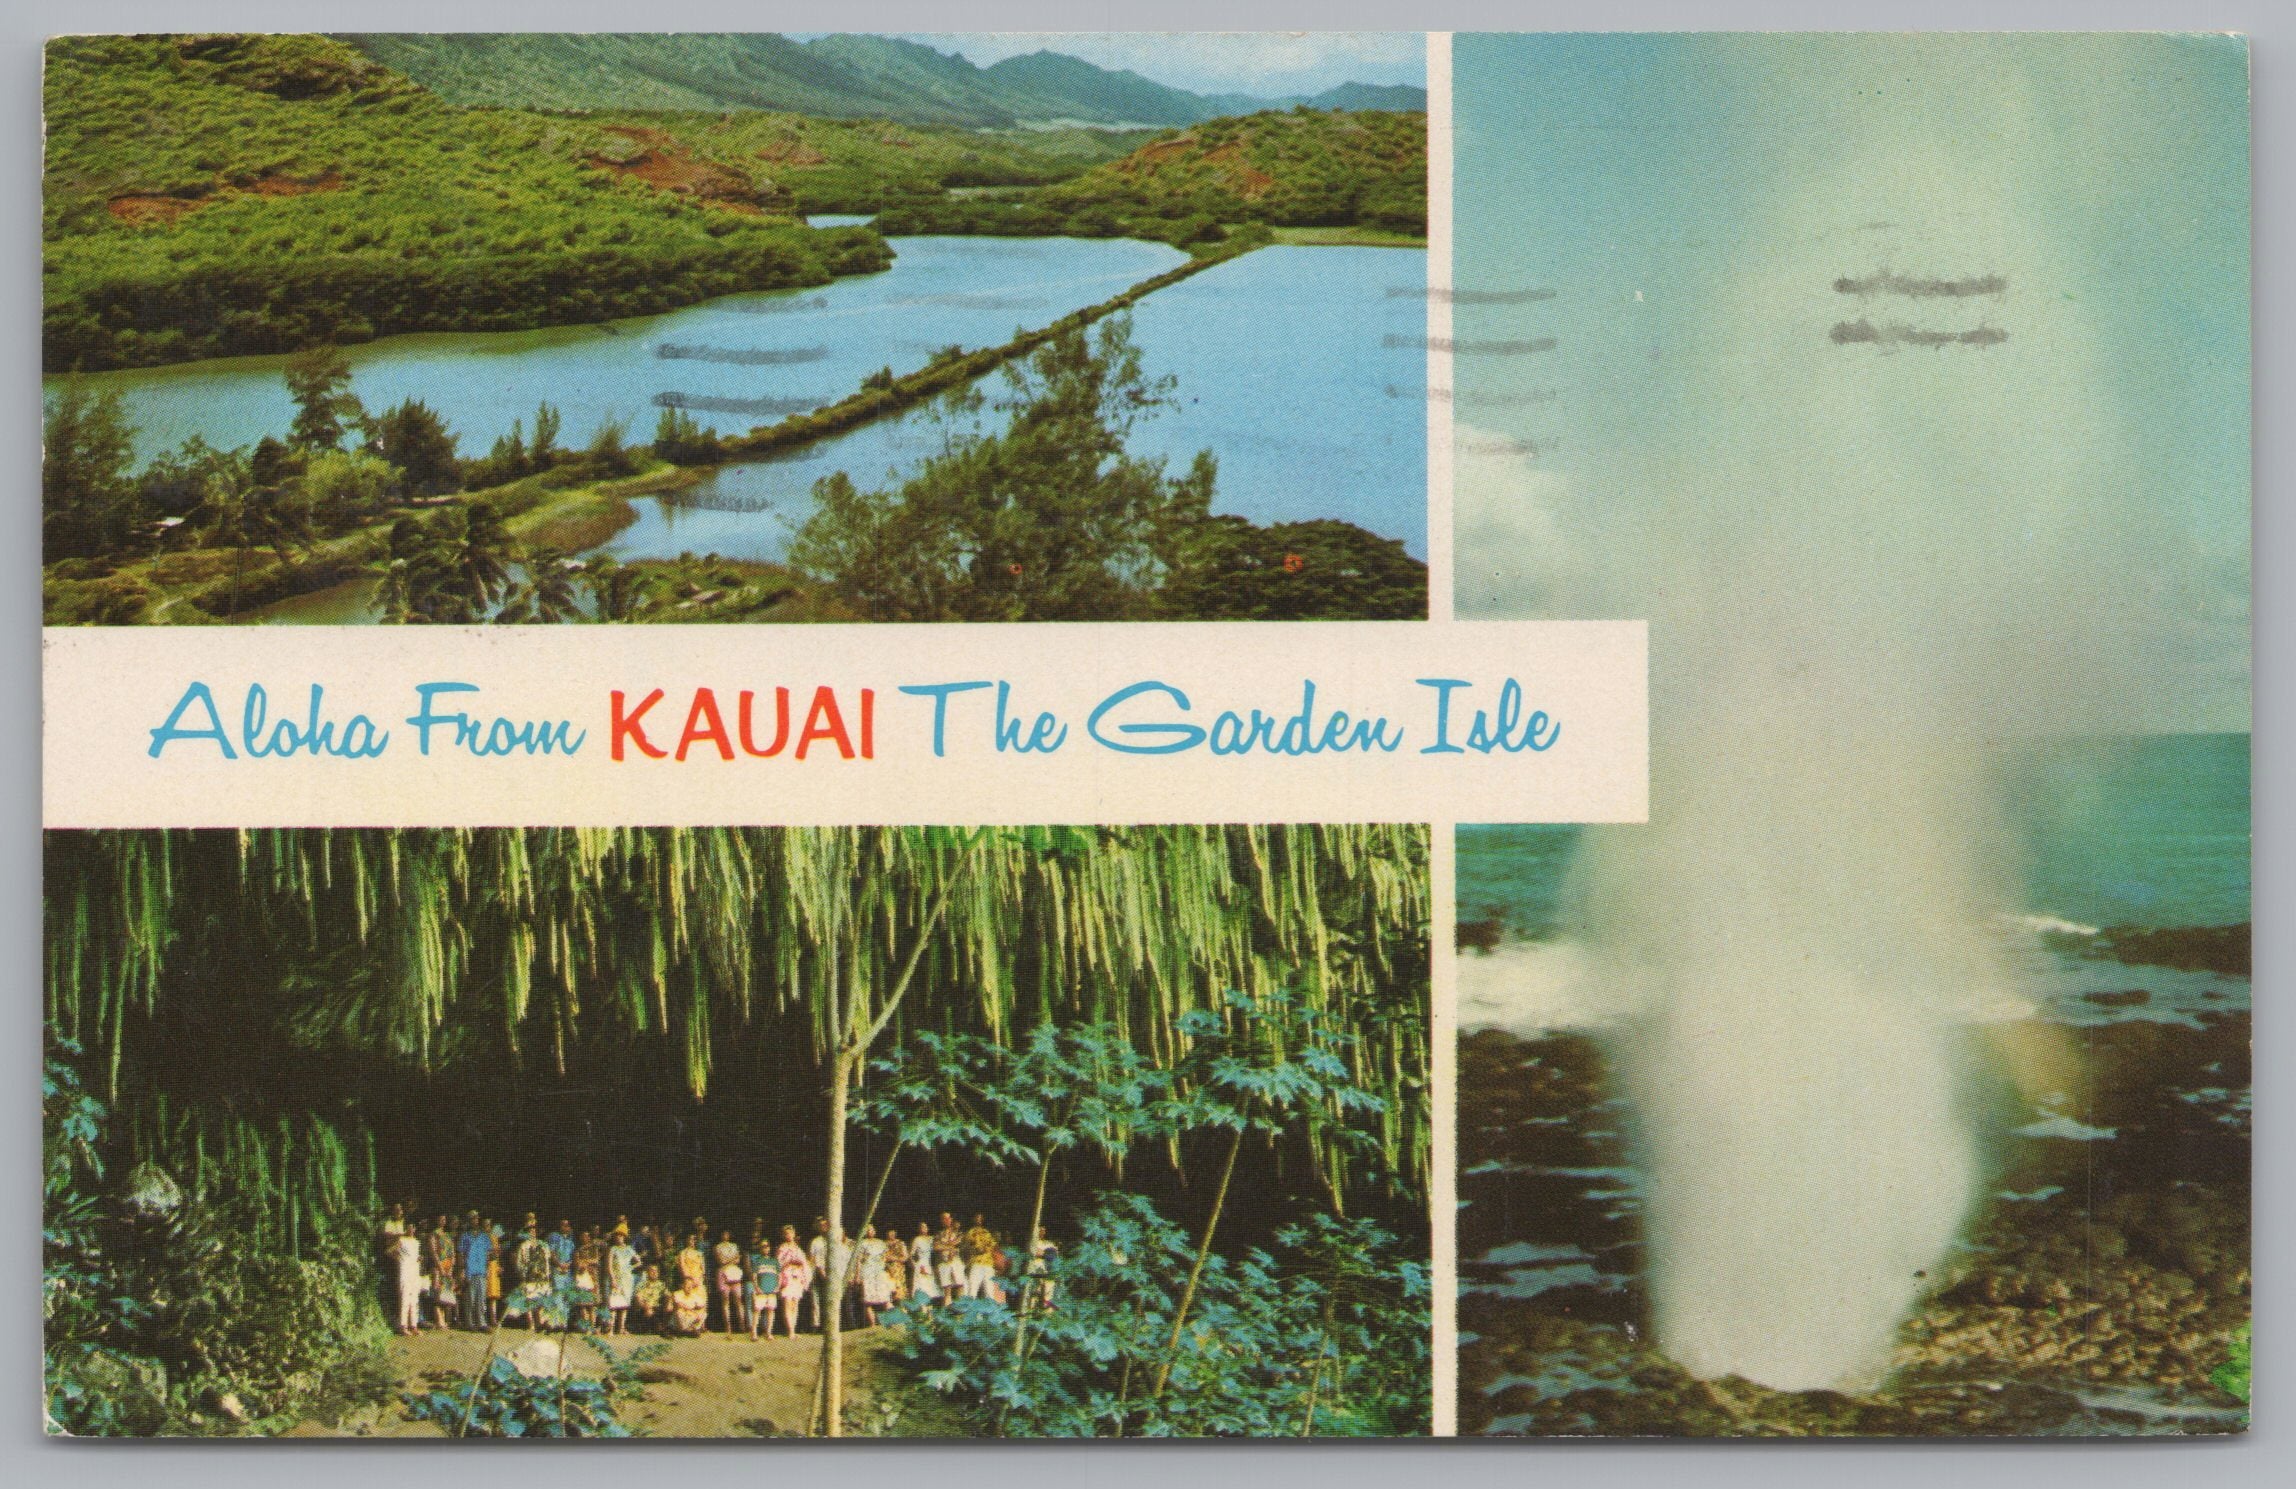 Greeting Card From Kauai, Hawaii, USA, The Garden Island, Vintage Post Card.